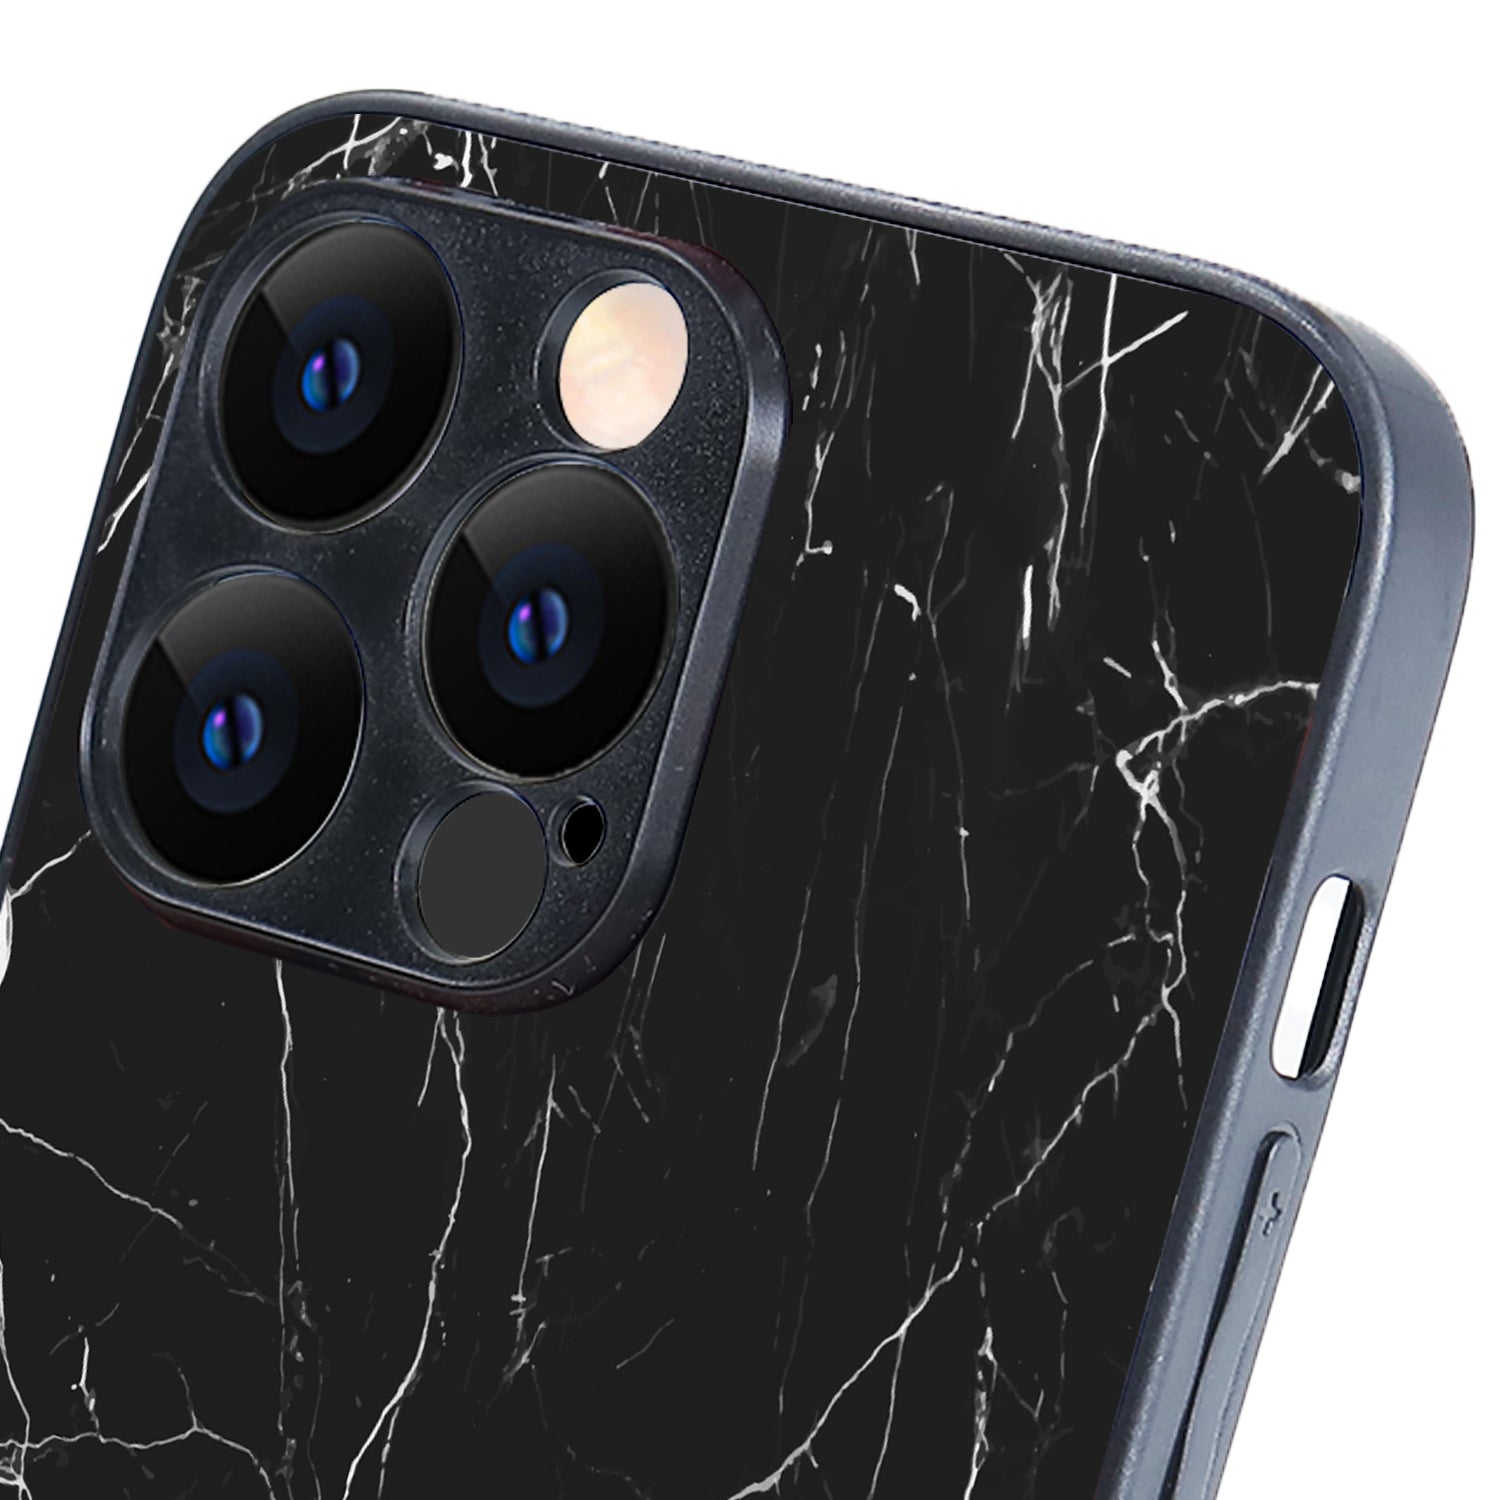 Black Tile Marble iPhone 14 Pro Max Case